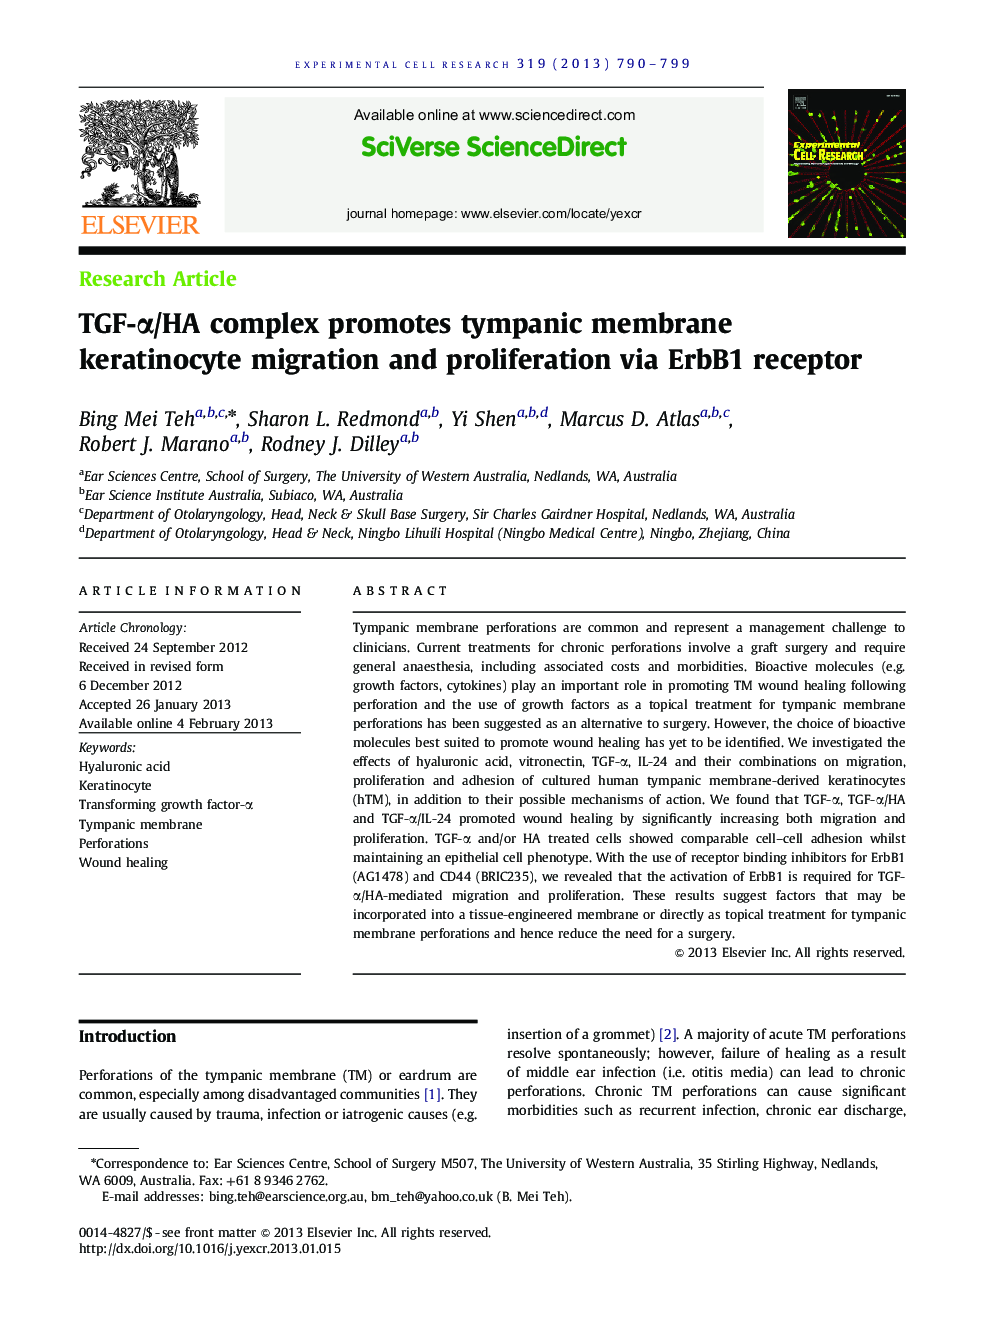 TGF-Î±/HA complex promotes tympanic membrane keratinocyte migration and proliferation via ErbB1 receptor